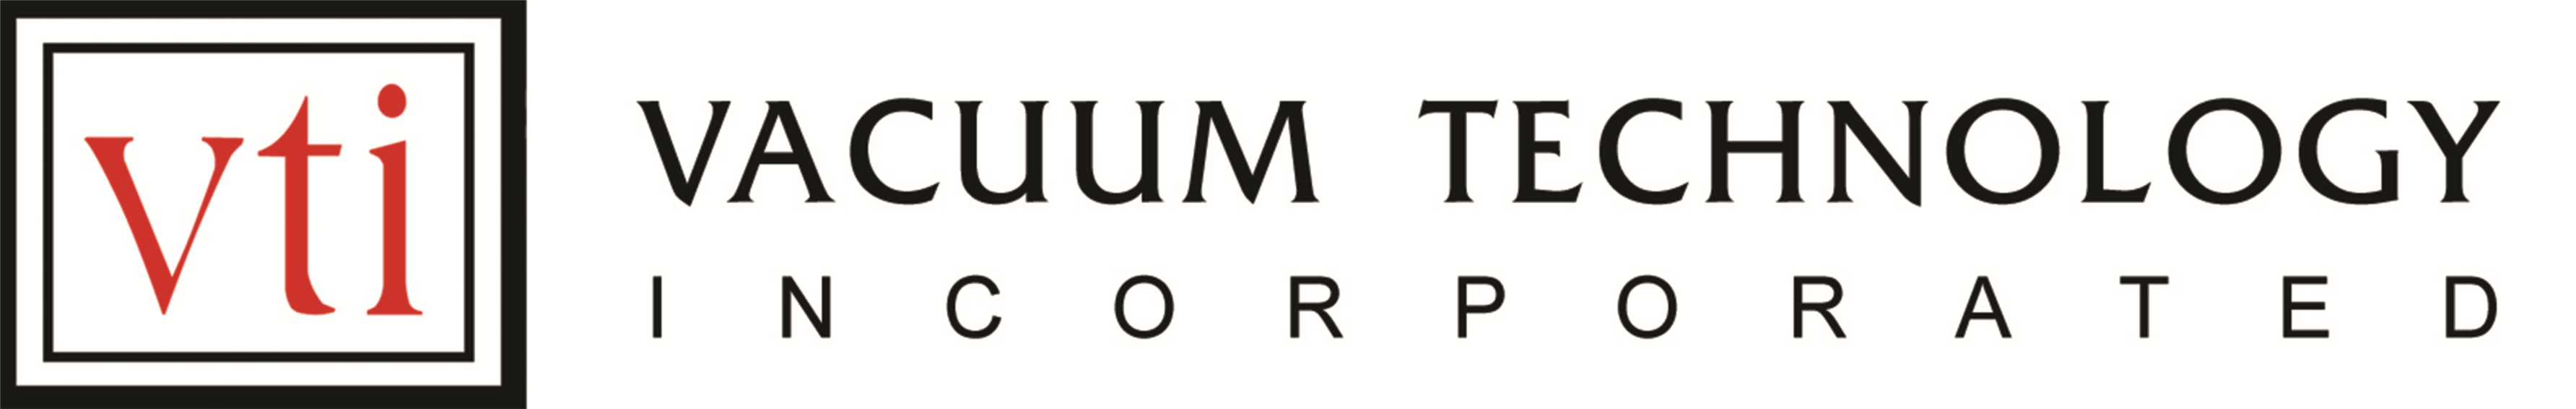 Vacuum Technology, Inc. logo